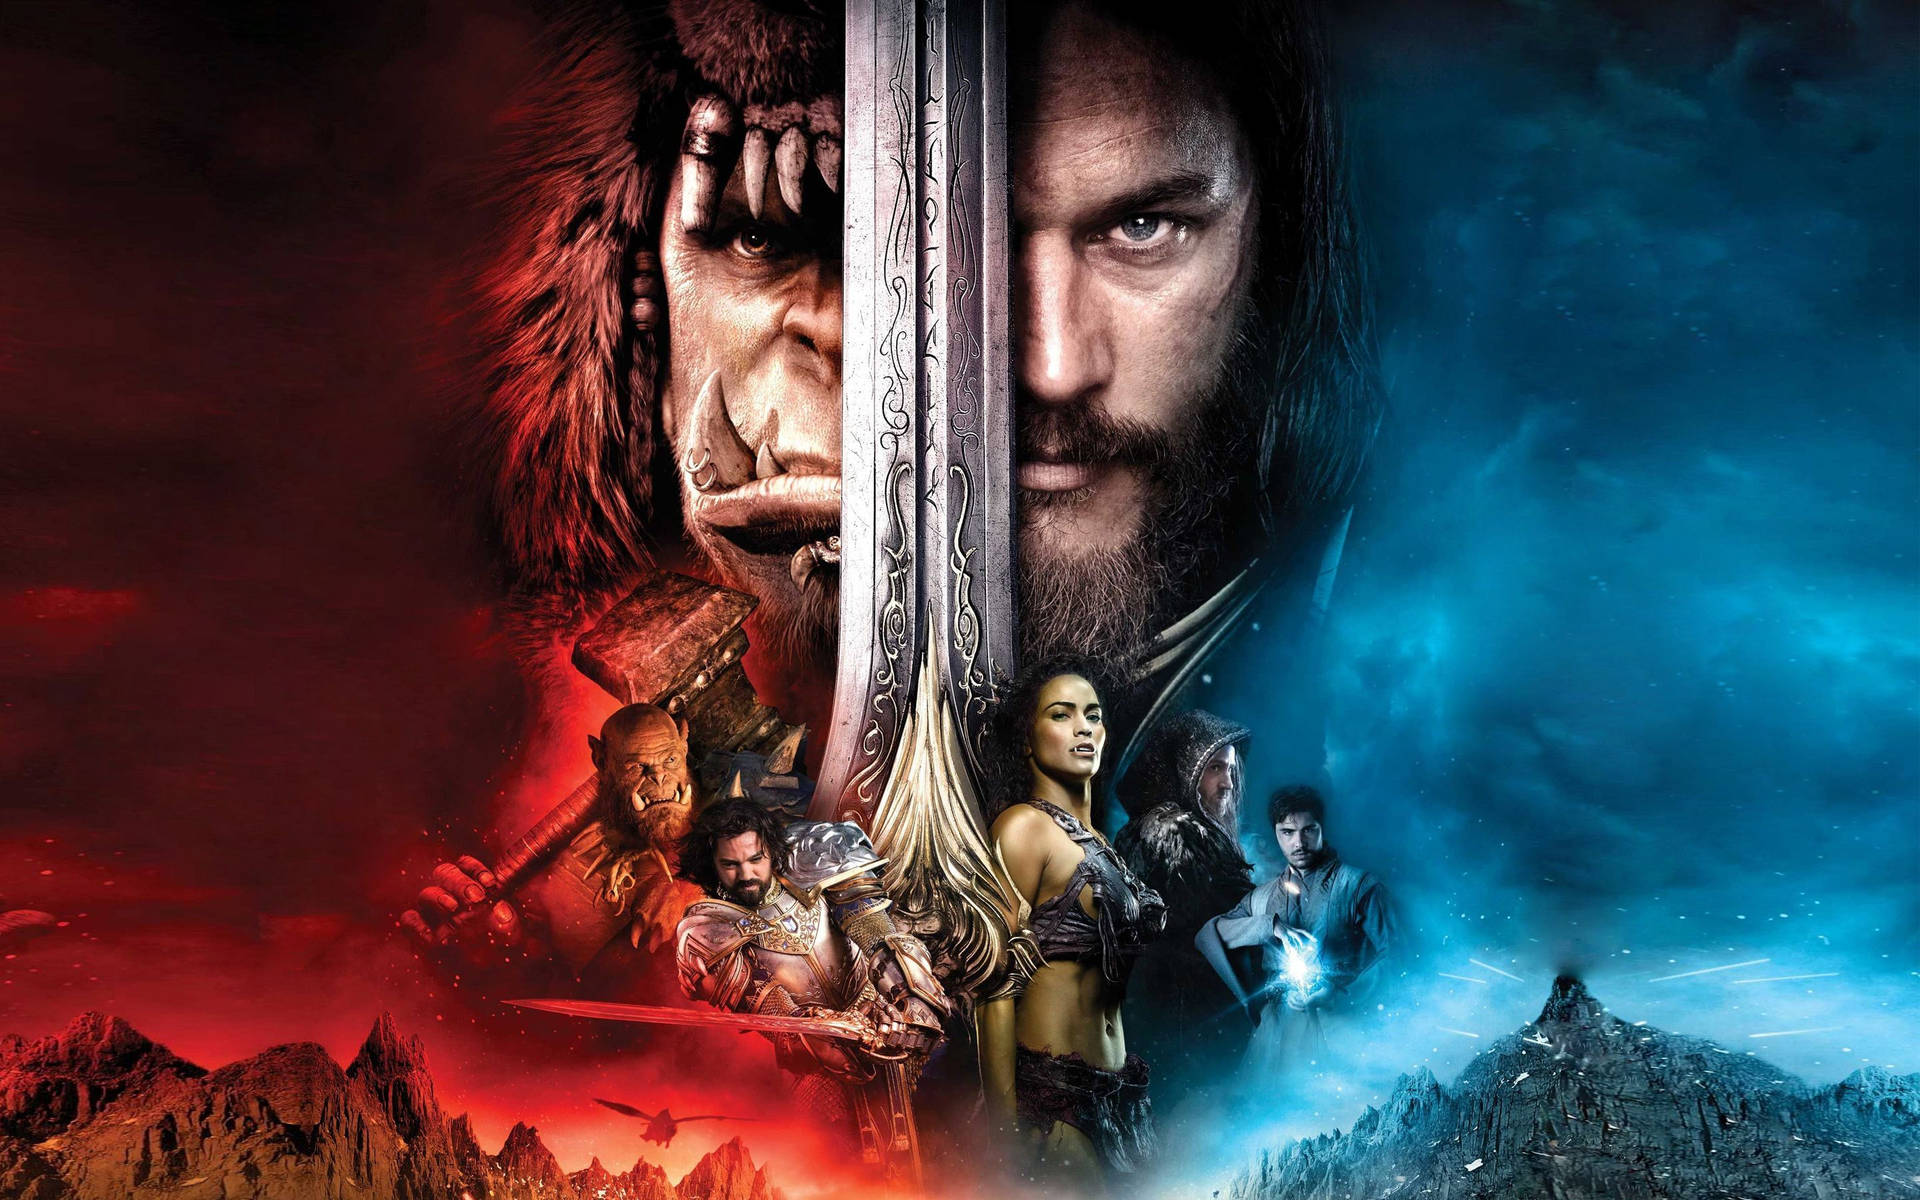 Warcraftfilm Poster Wallpaper